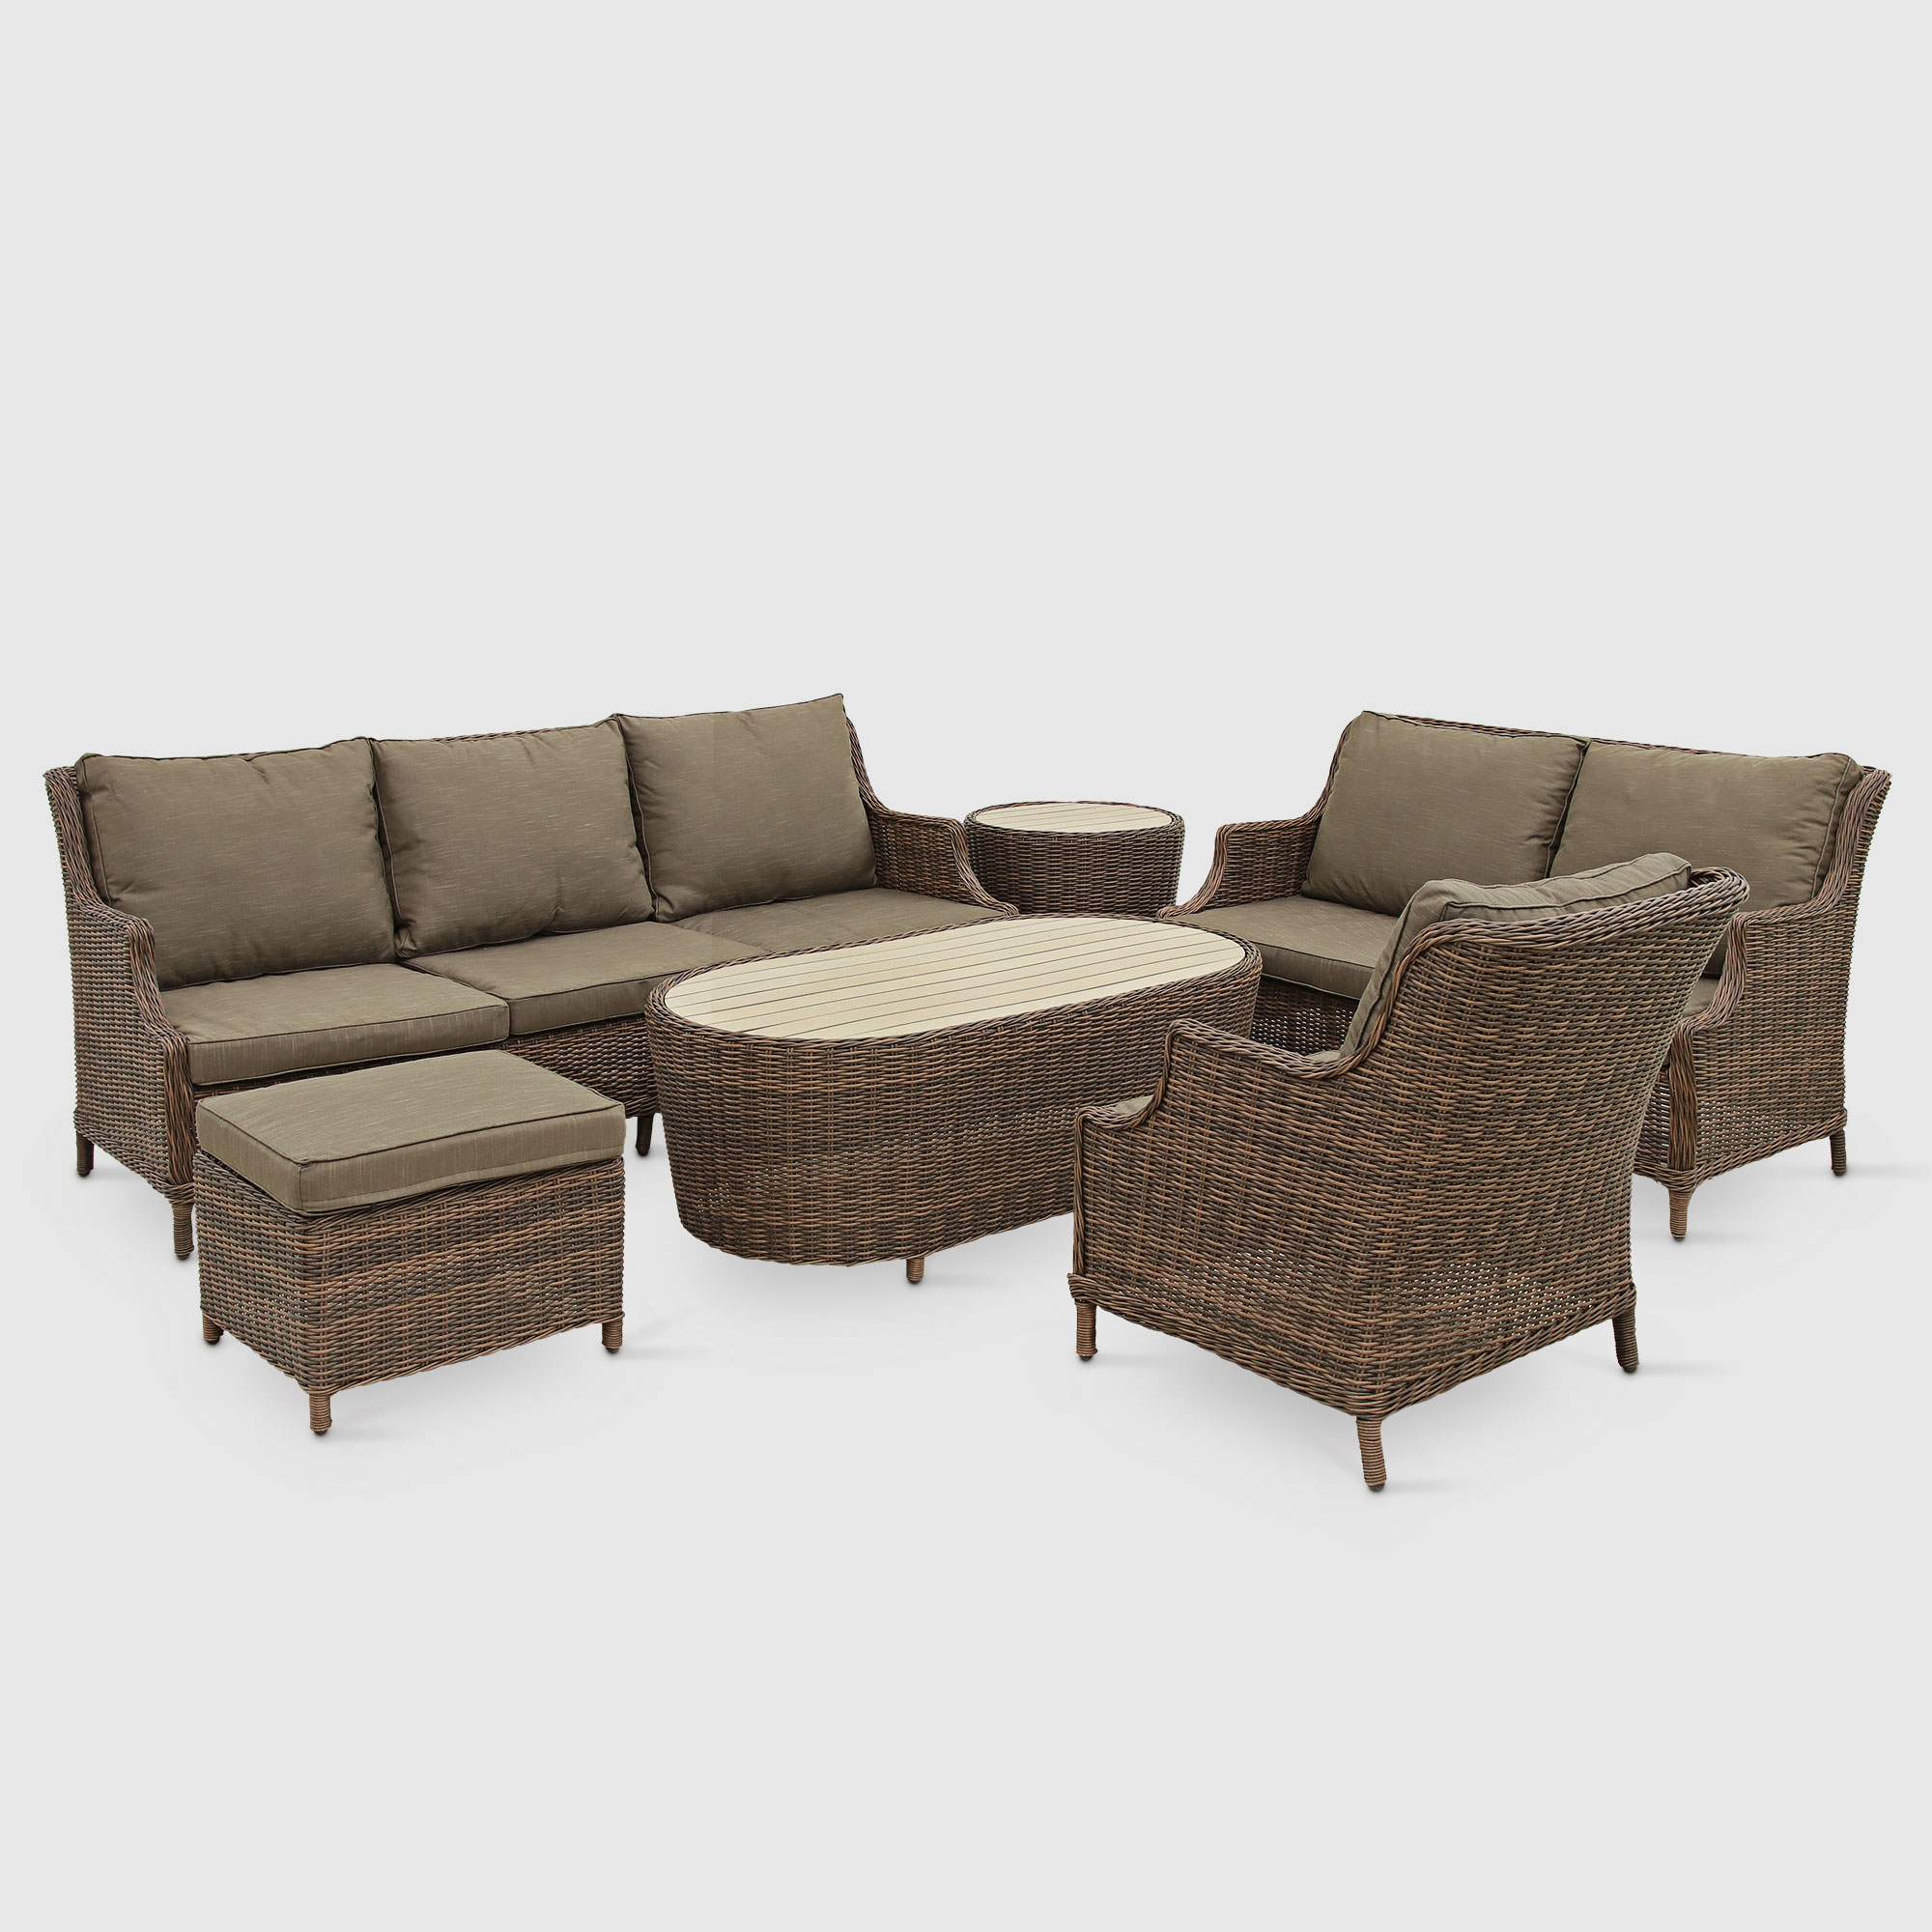 Комплект мебели Yuhang кресло + оттоманка + 2 софы + 2 стола, цвет серо-коричневый, размер 150х86х89; 208х80х87